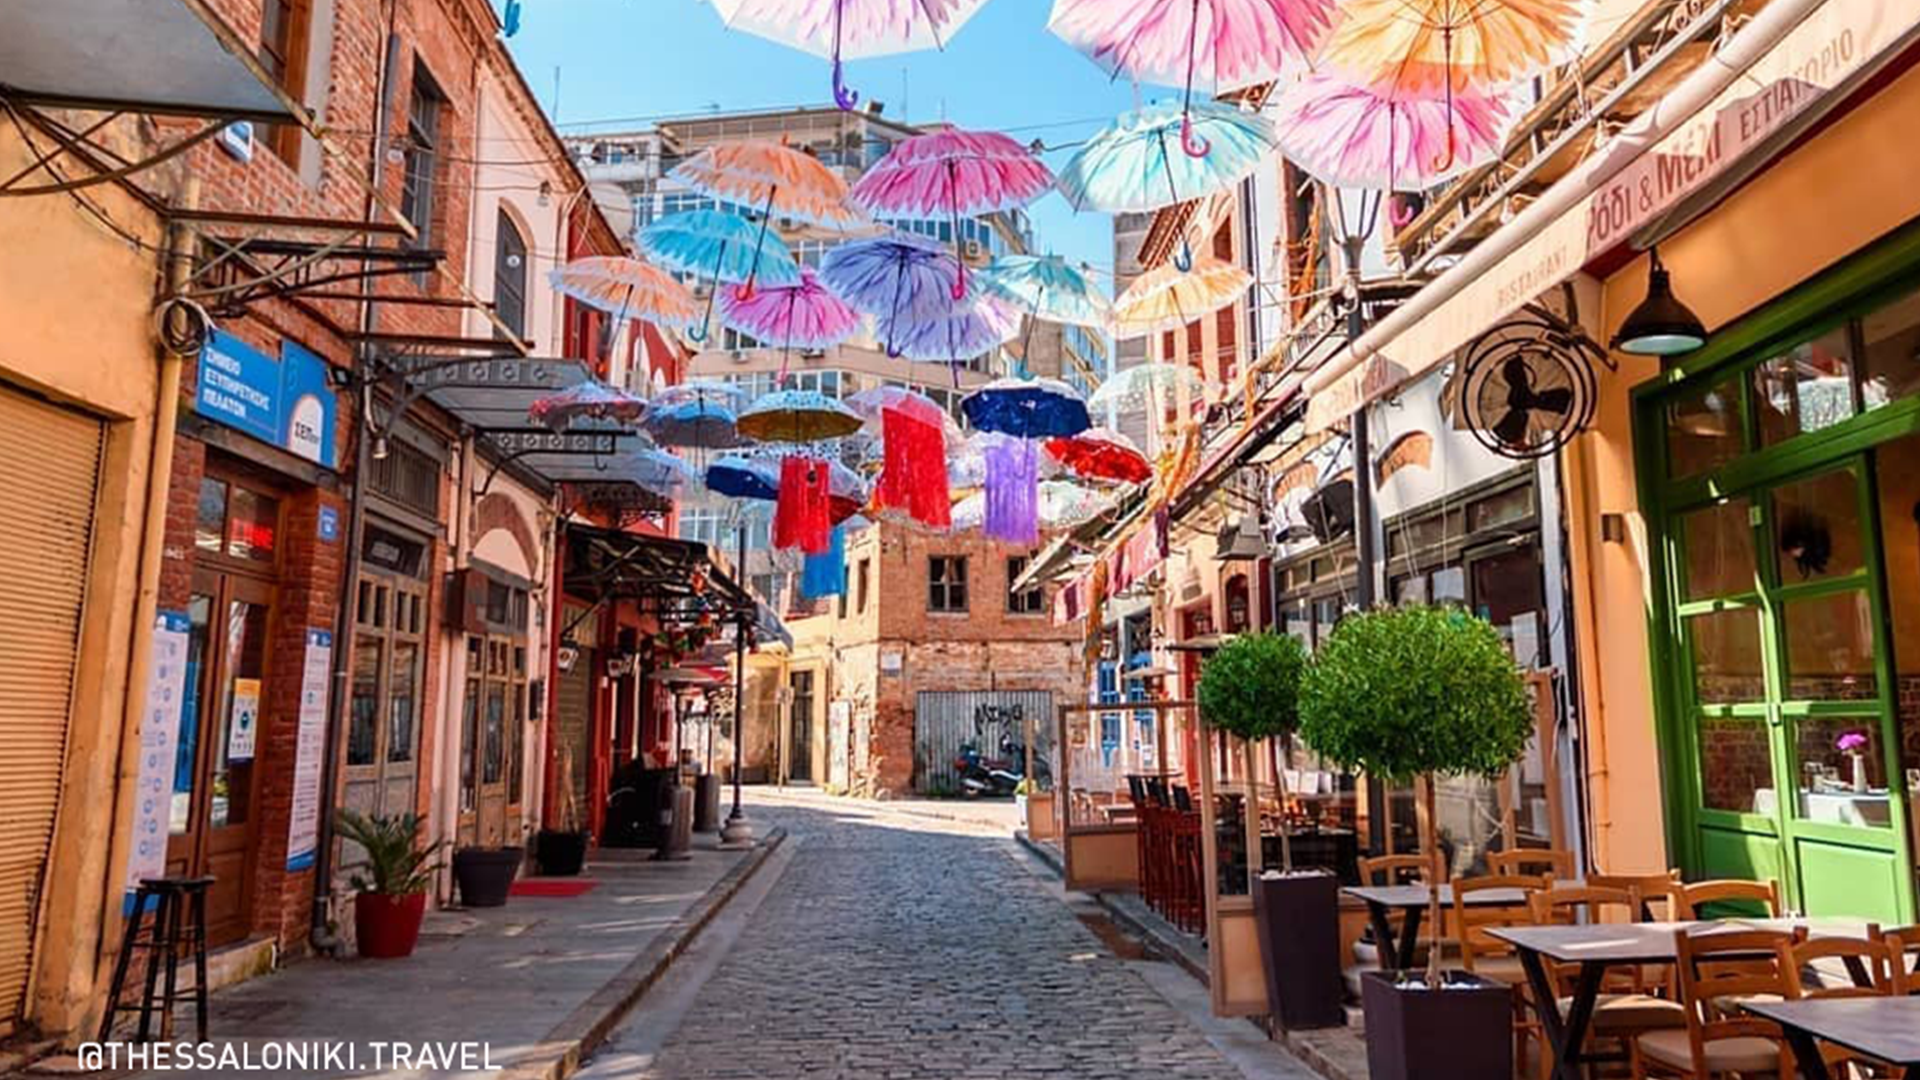 Umbrellas strung between apartments in Thessaloniki, Greece